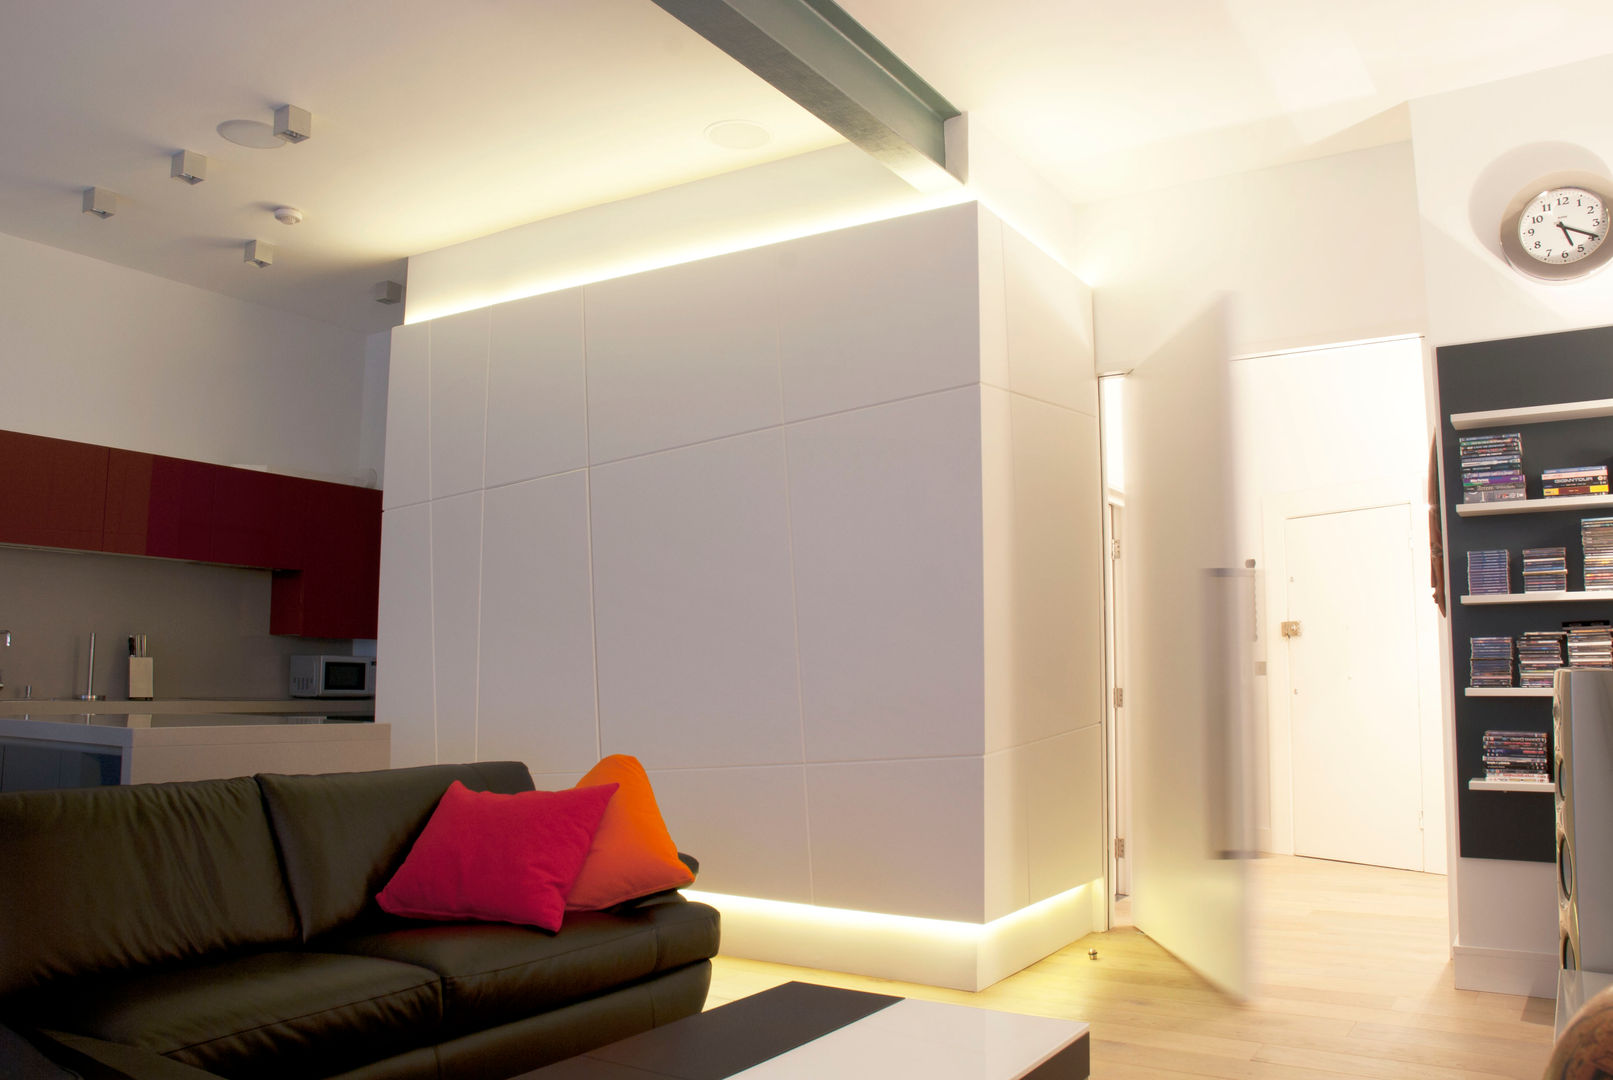 Collingham Road Guarnieri Architects ห้องนั่งเล่น LED Lighting,space,living room